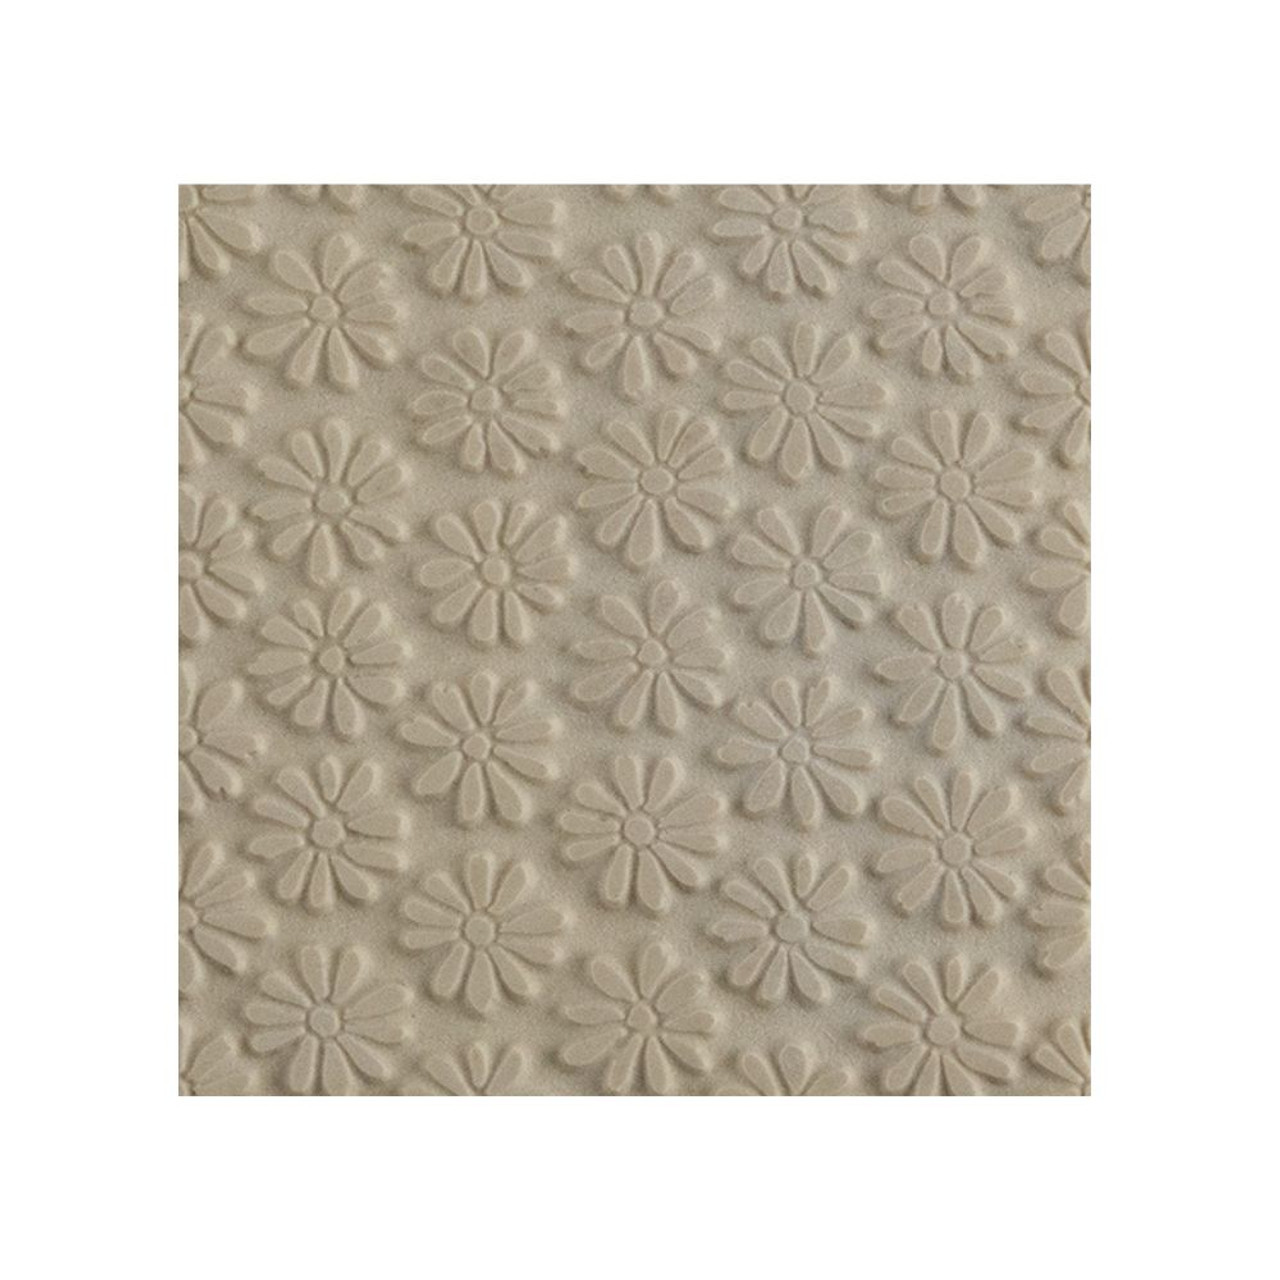 Texture Tile - Upsy Daisy close up